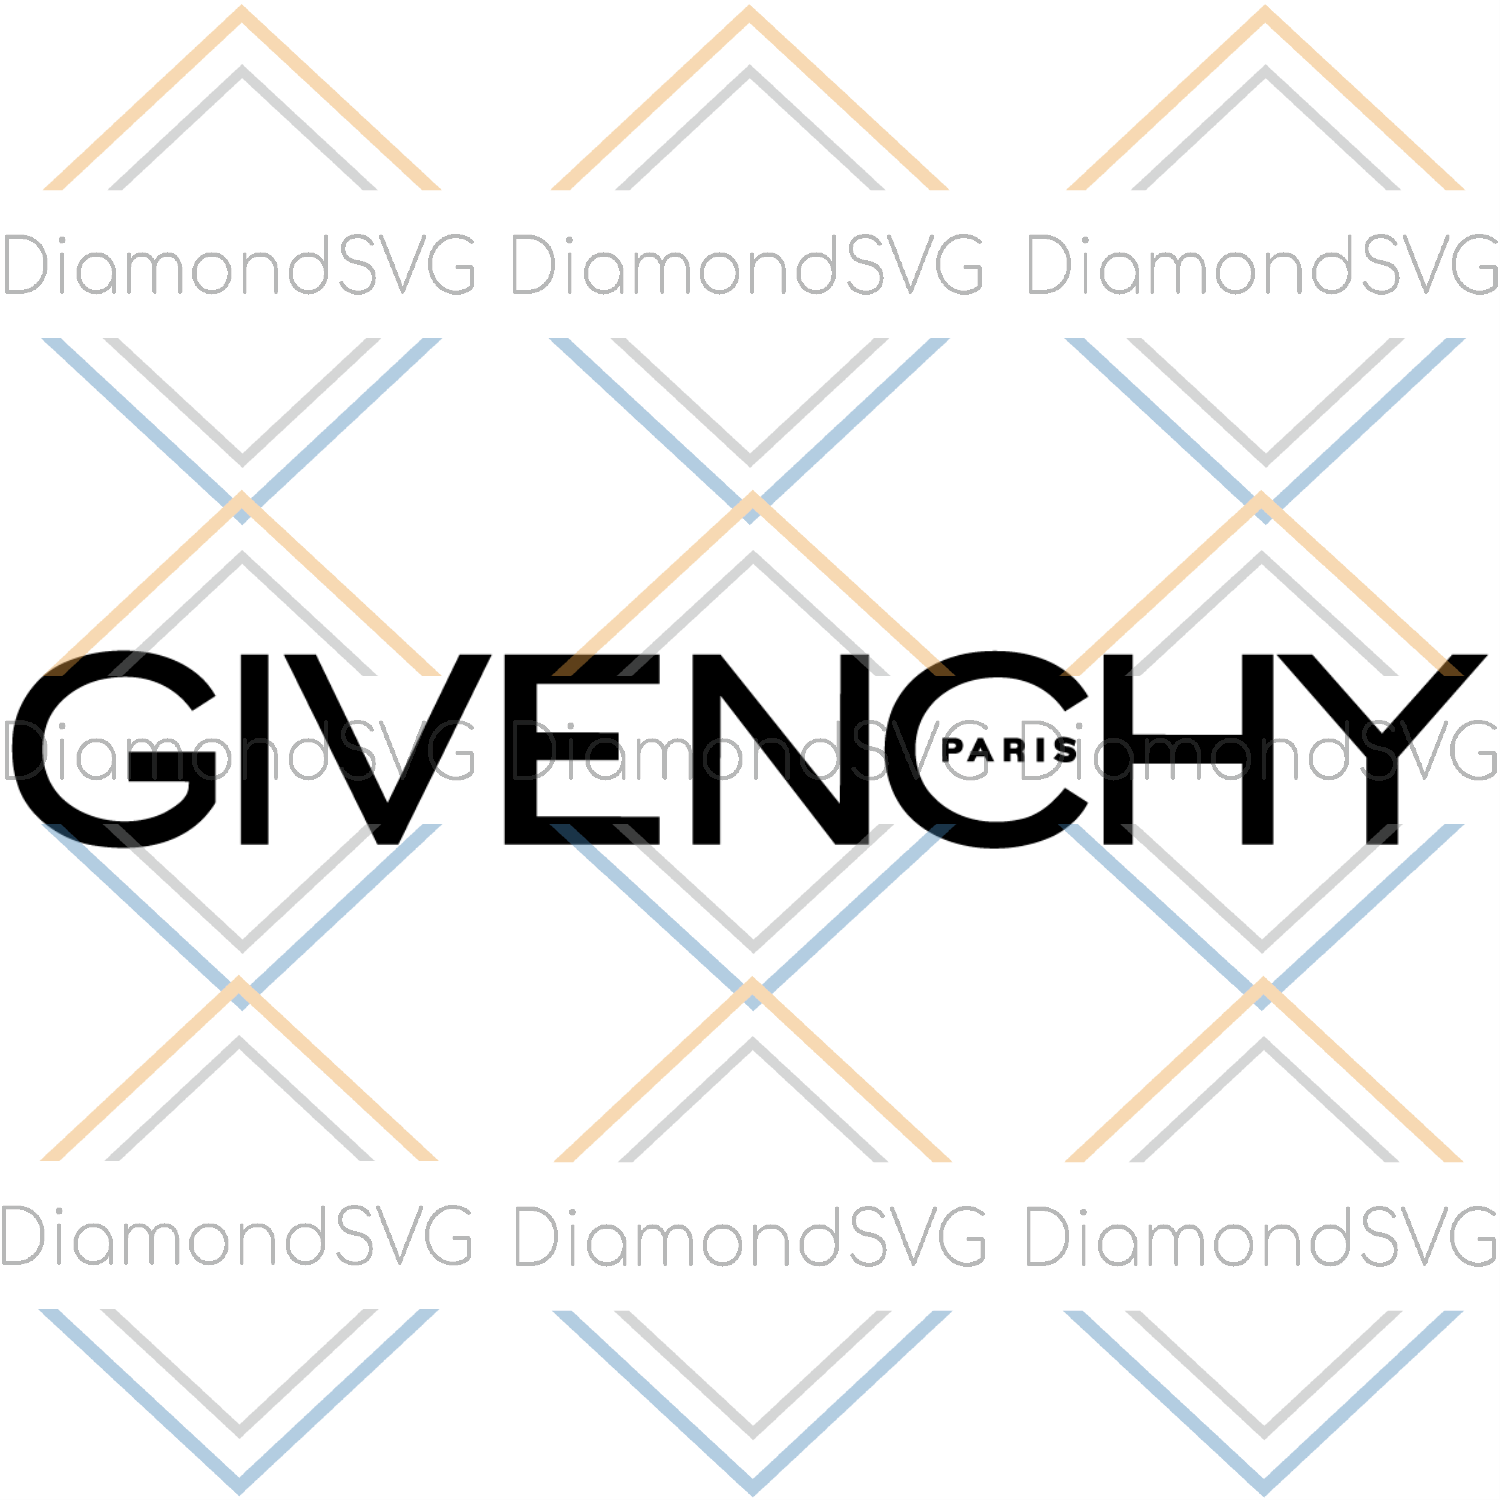 Givenchy Paris Logo Svg, Trending Svg, Givenchy Svg, Givenchy Paris